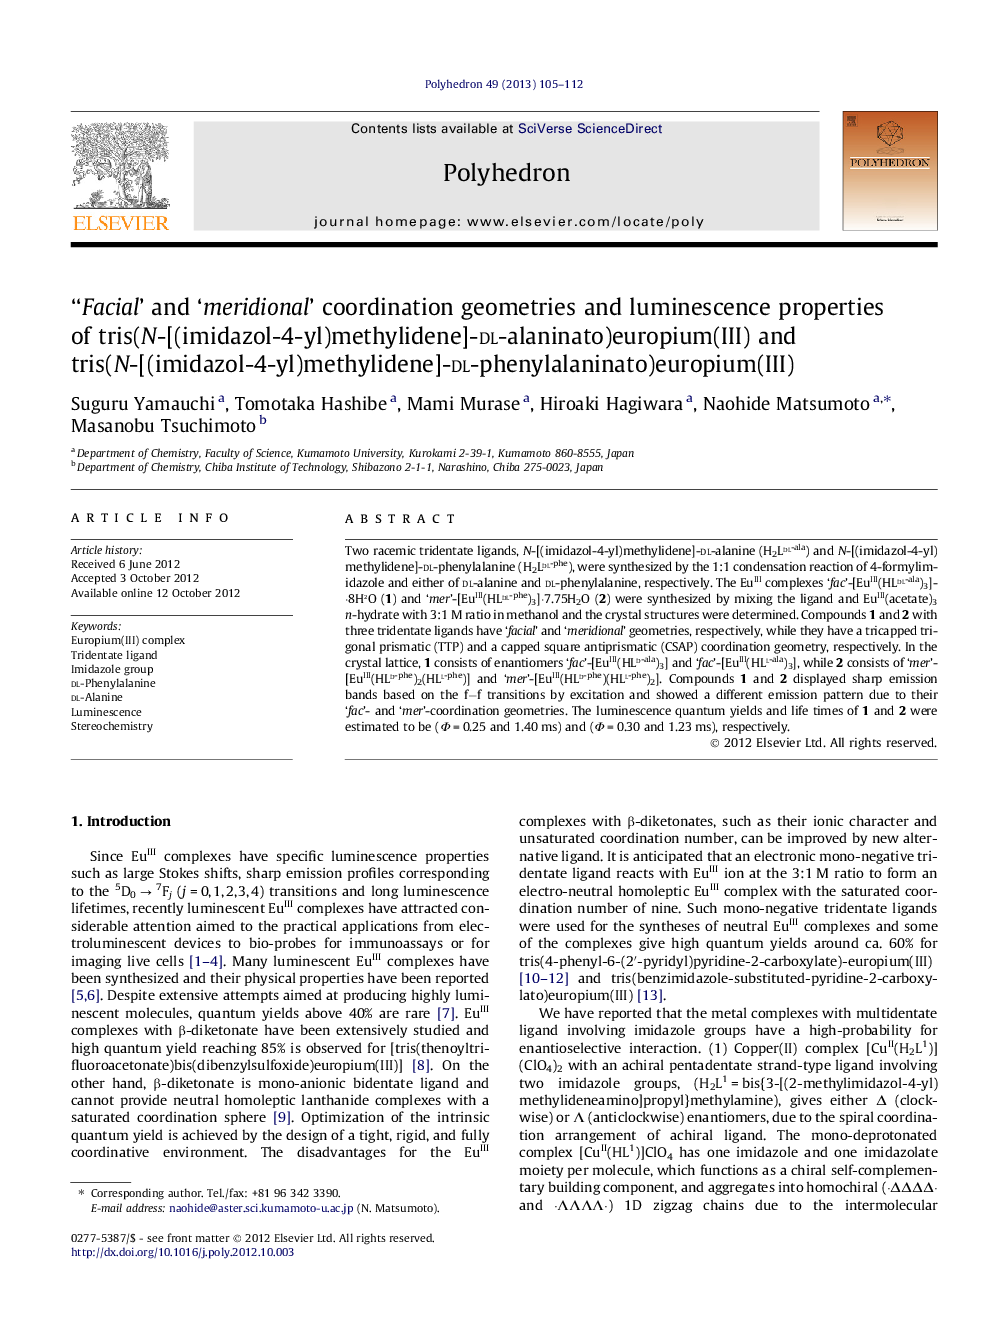 ‘Facial’ and ‘meridional’ coordination geometries and luminescence properties of tris(N-[(imidazol-4-yl)methylidene]-dl-alaninato)europium(III) and tris(N-[(imidazol-4-yl)methylidene]-dl-phenylalaninato)europium(III)